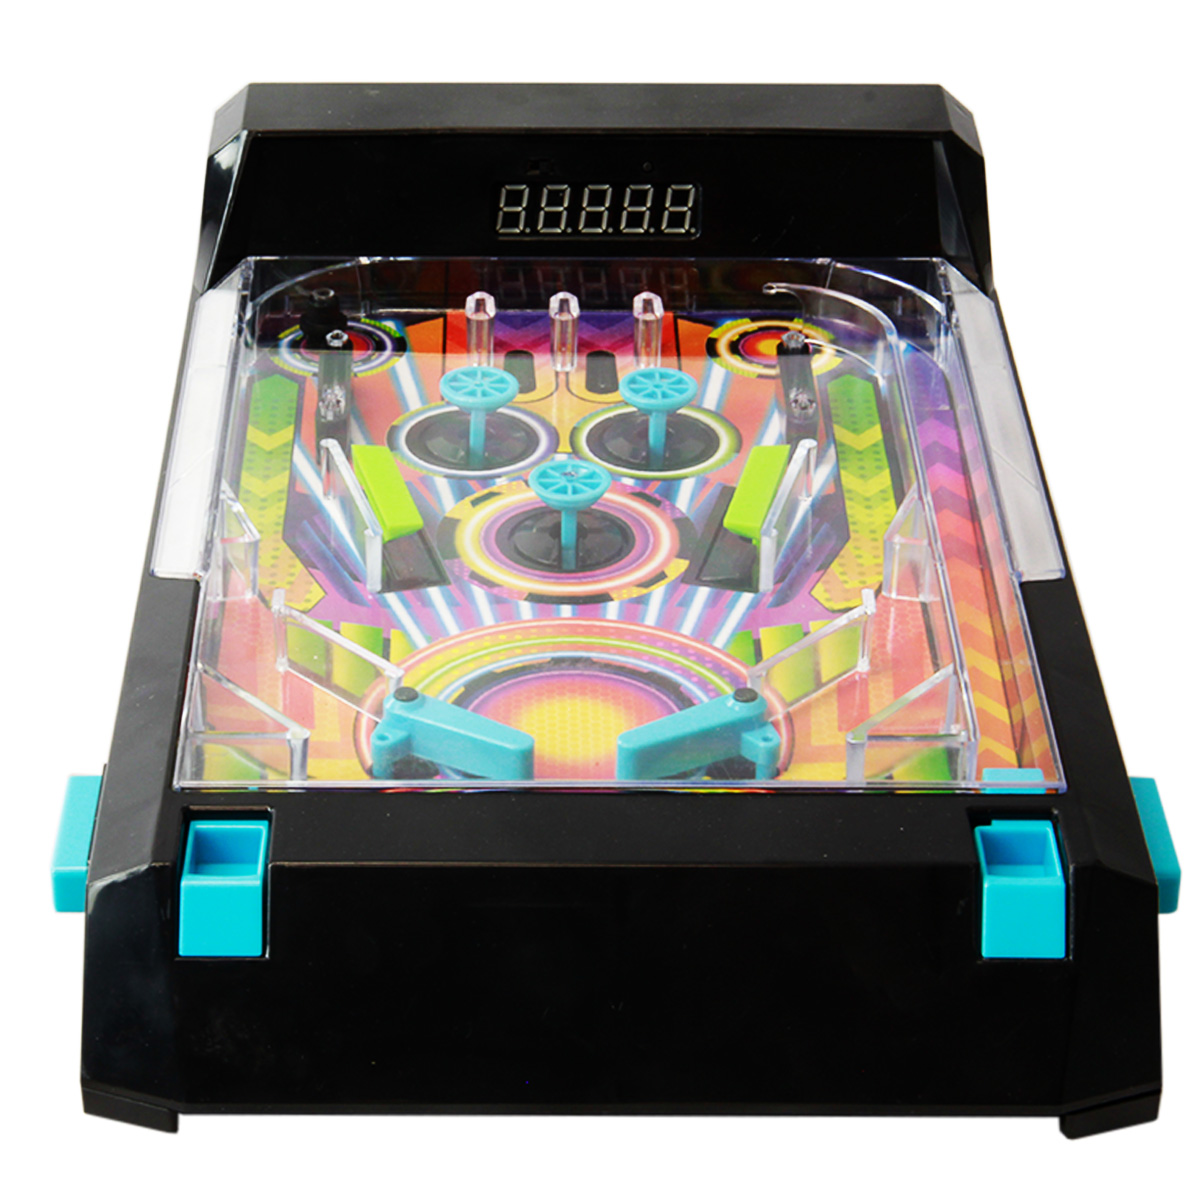 Jeu arcade électronique Pinball — Griffon